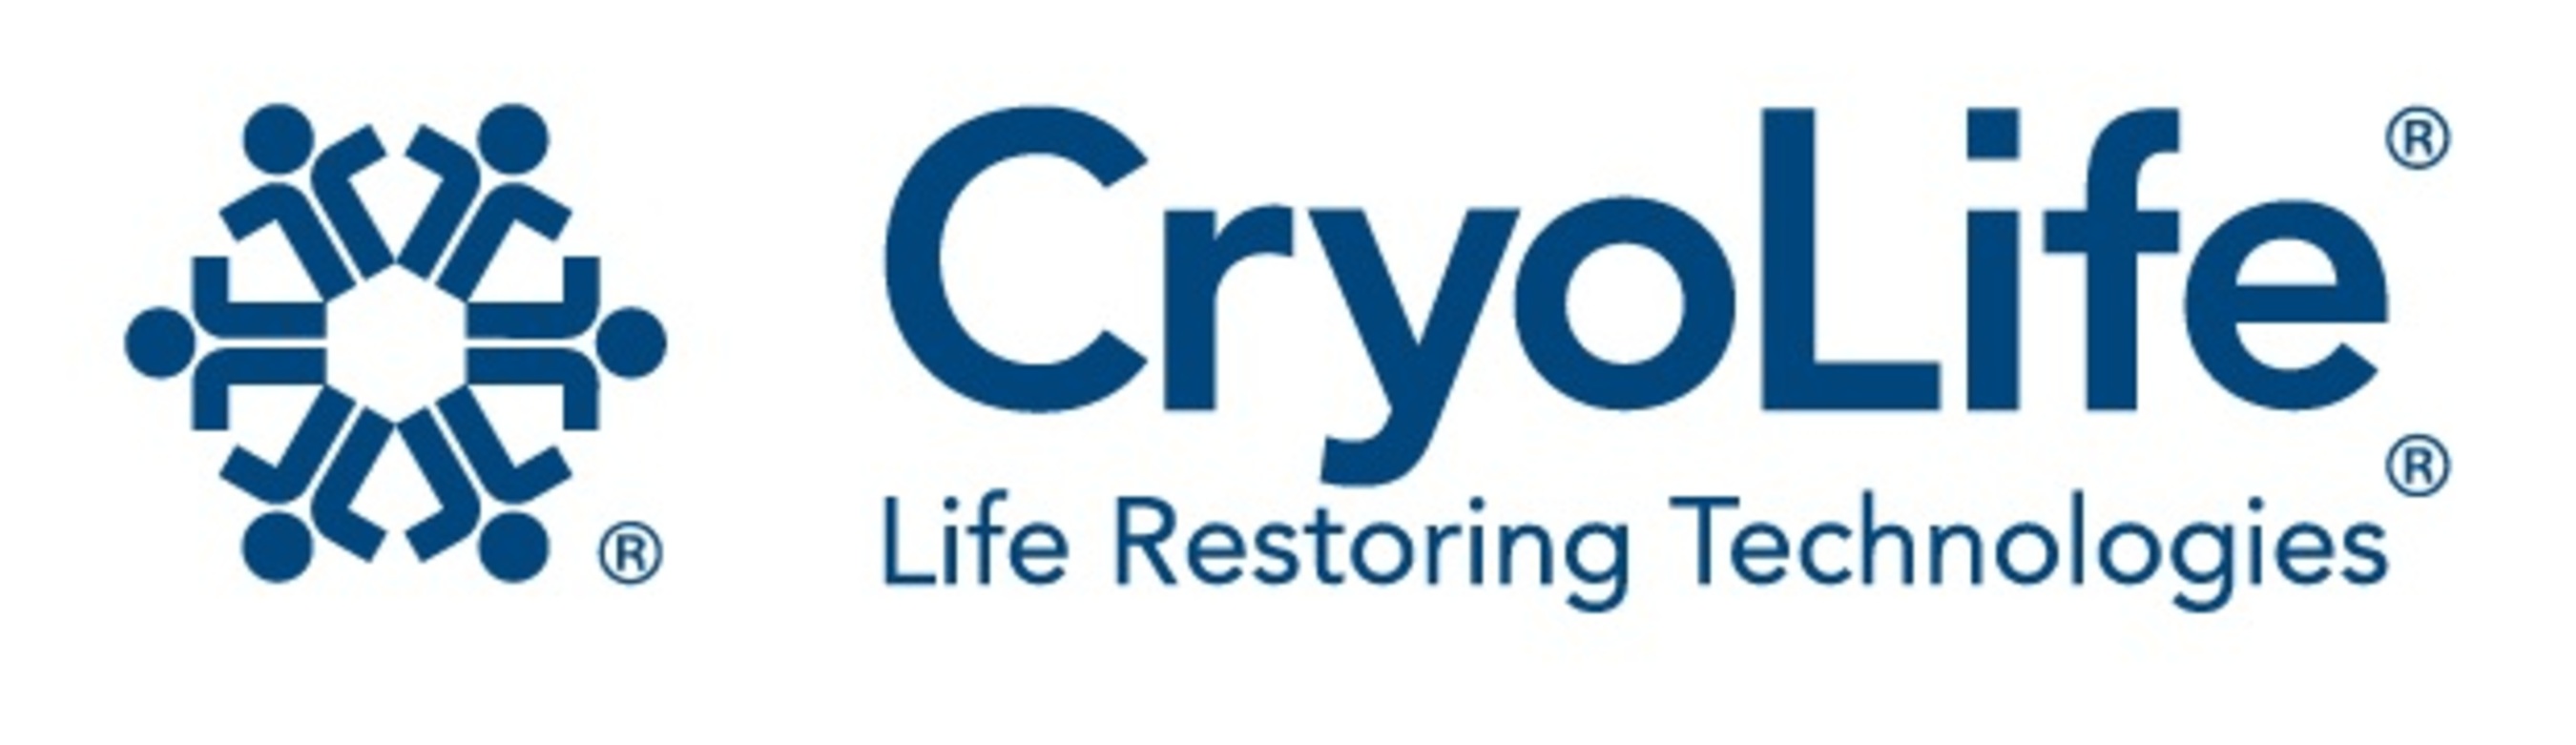 Cryolife logo. (PRNewsFoto/CryoLife, Inc.)